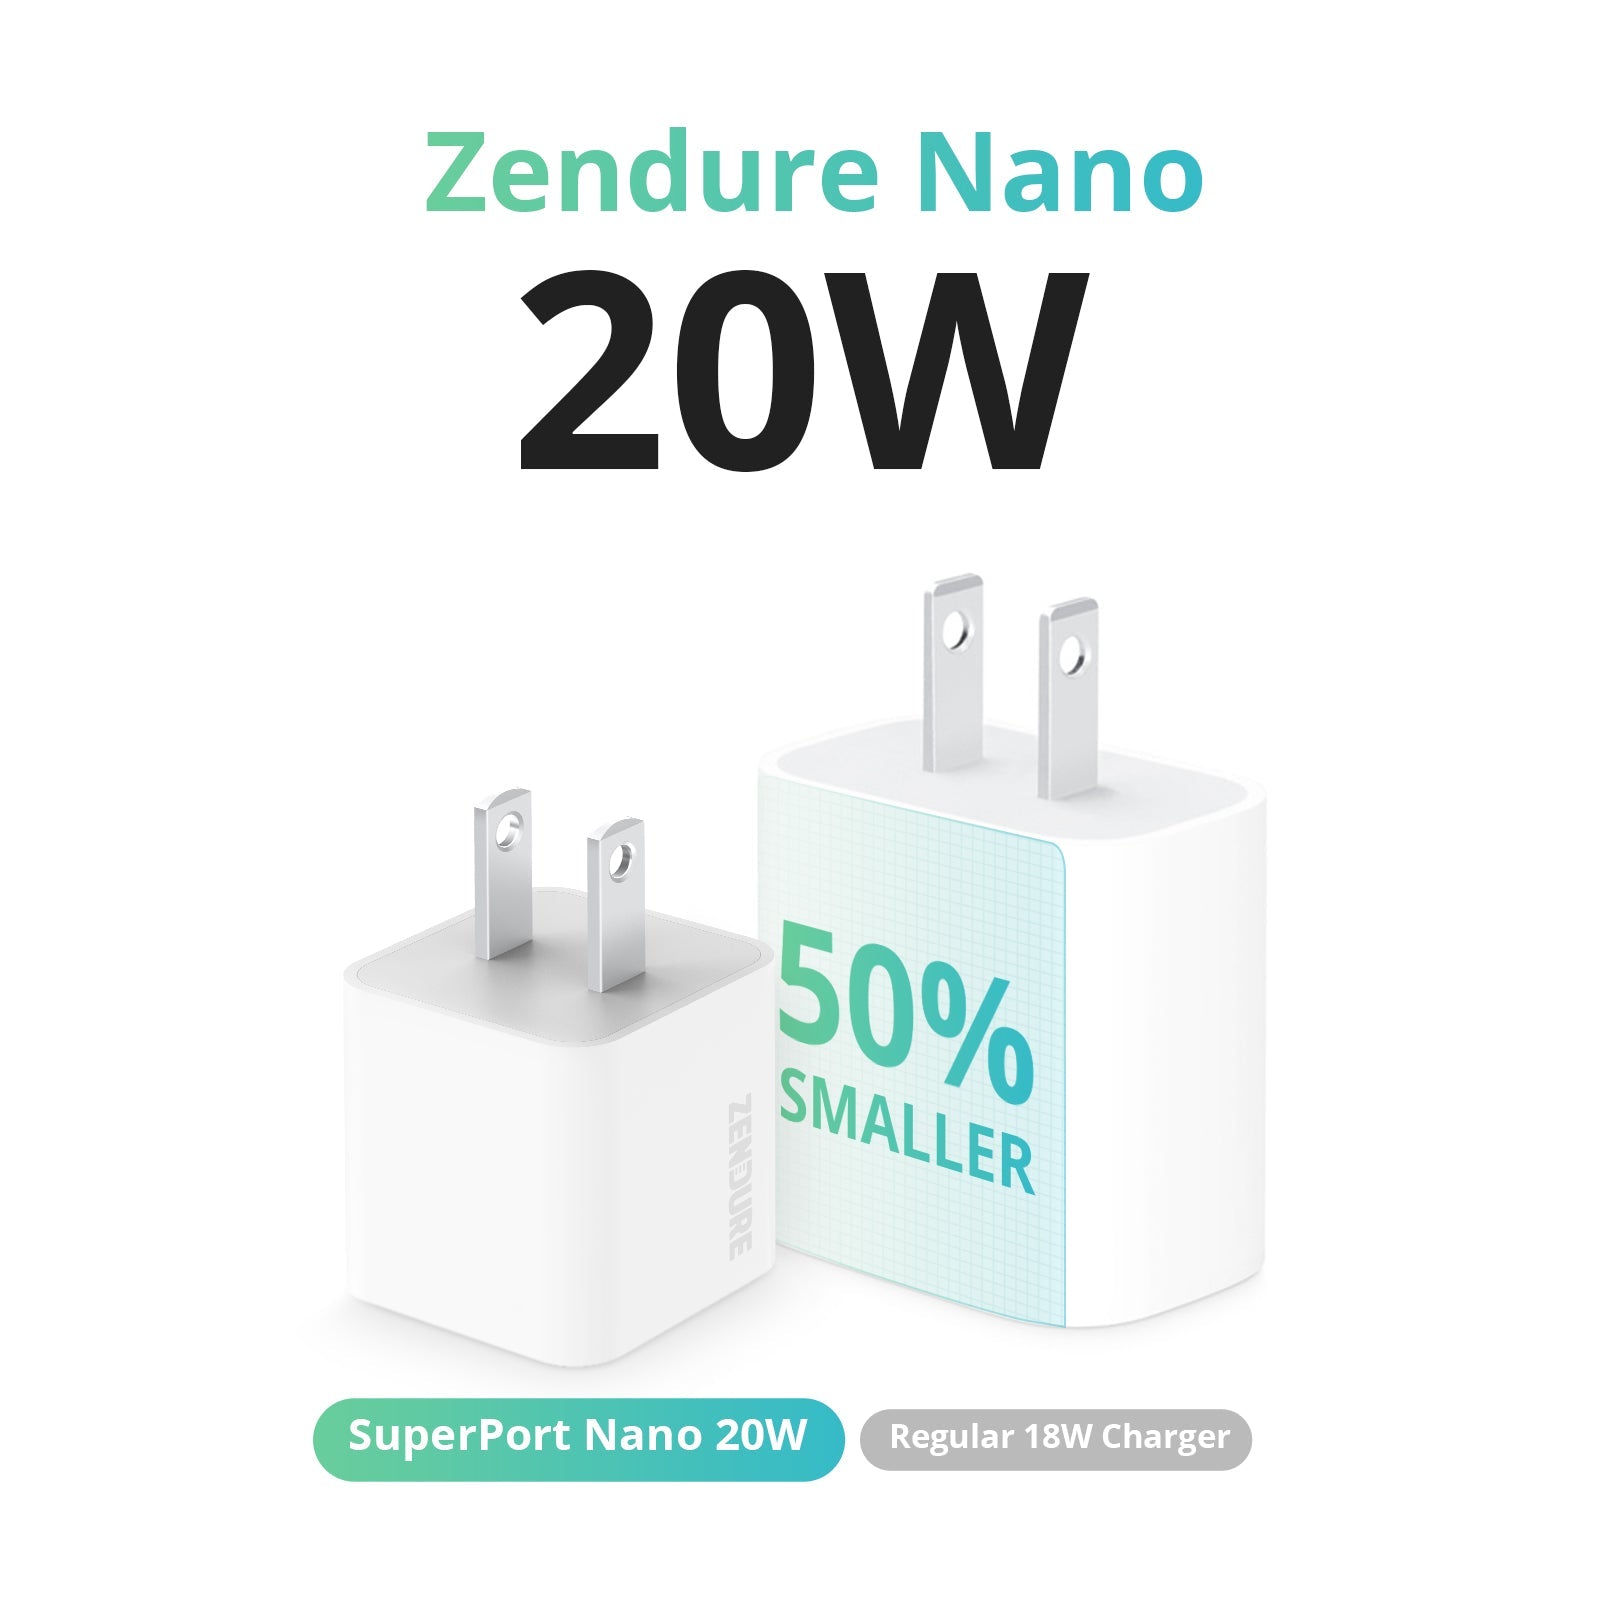 SuperPort Nano 20W